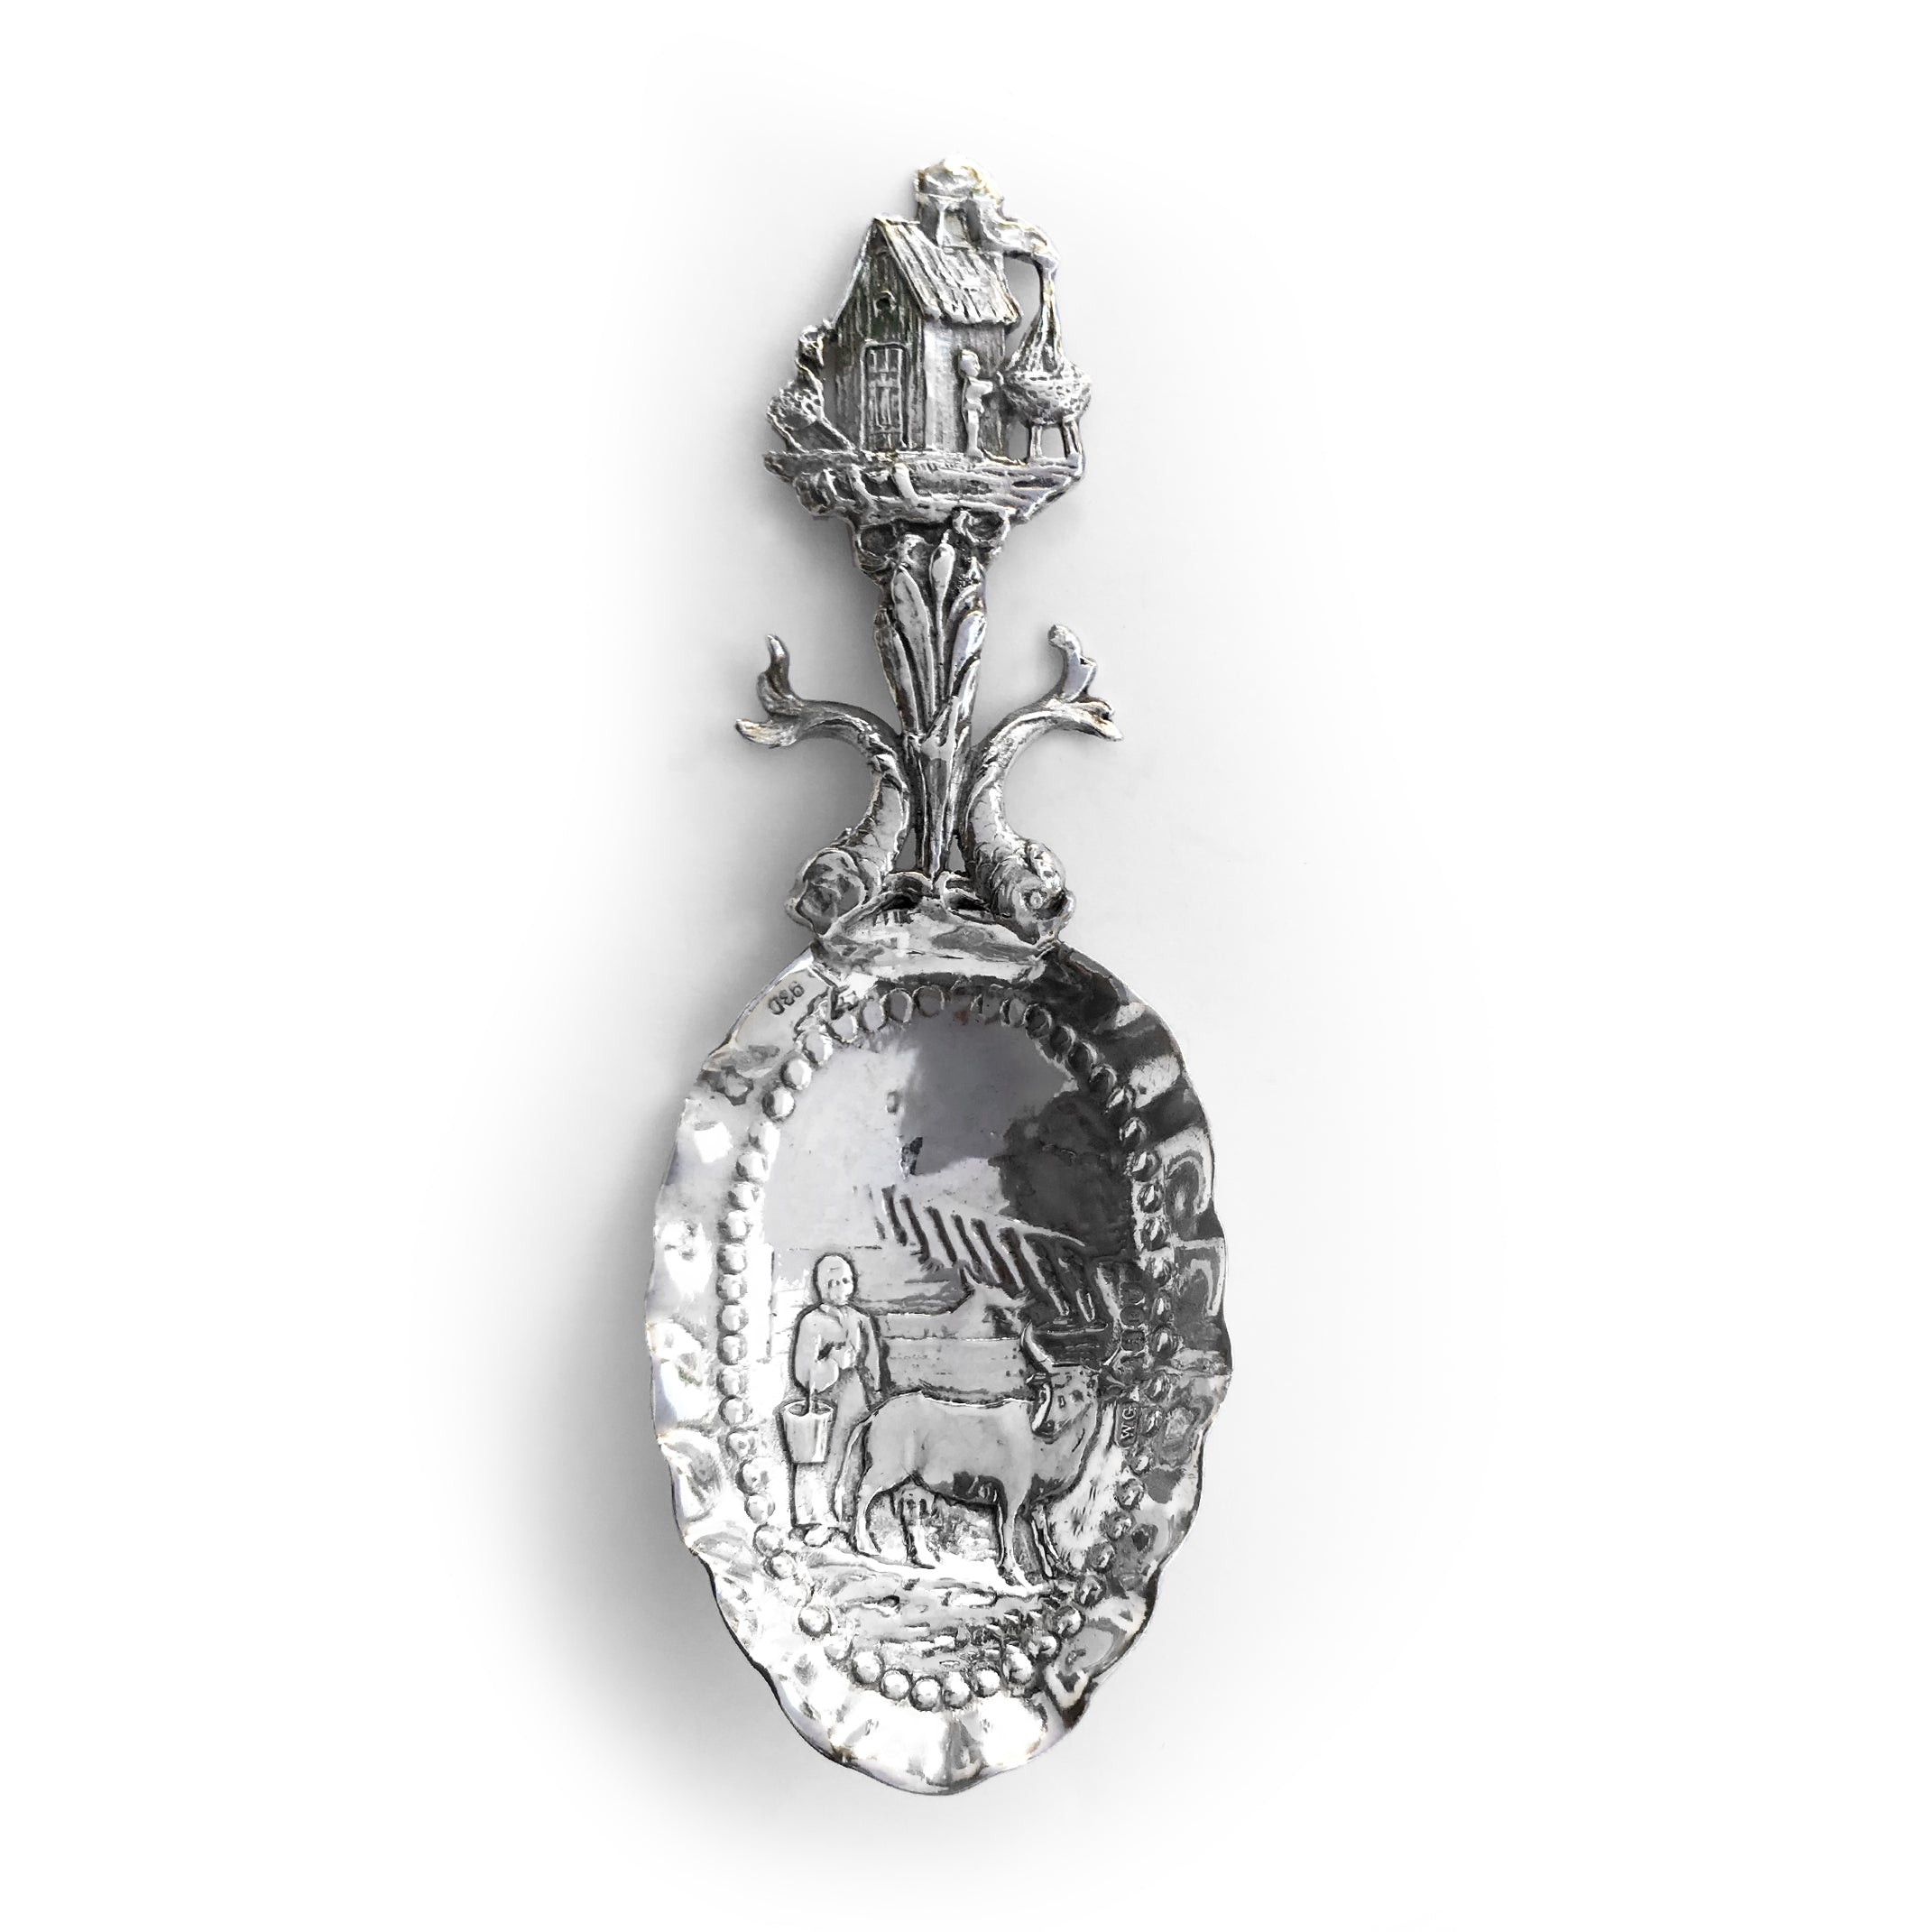 Solid Silver Dutch Tea Caddy Spoon circa 1750